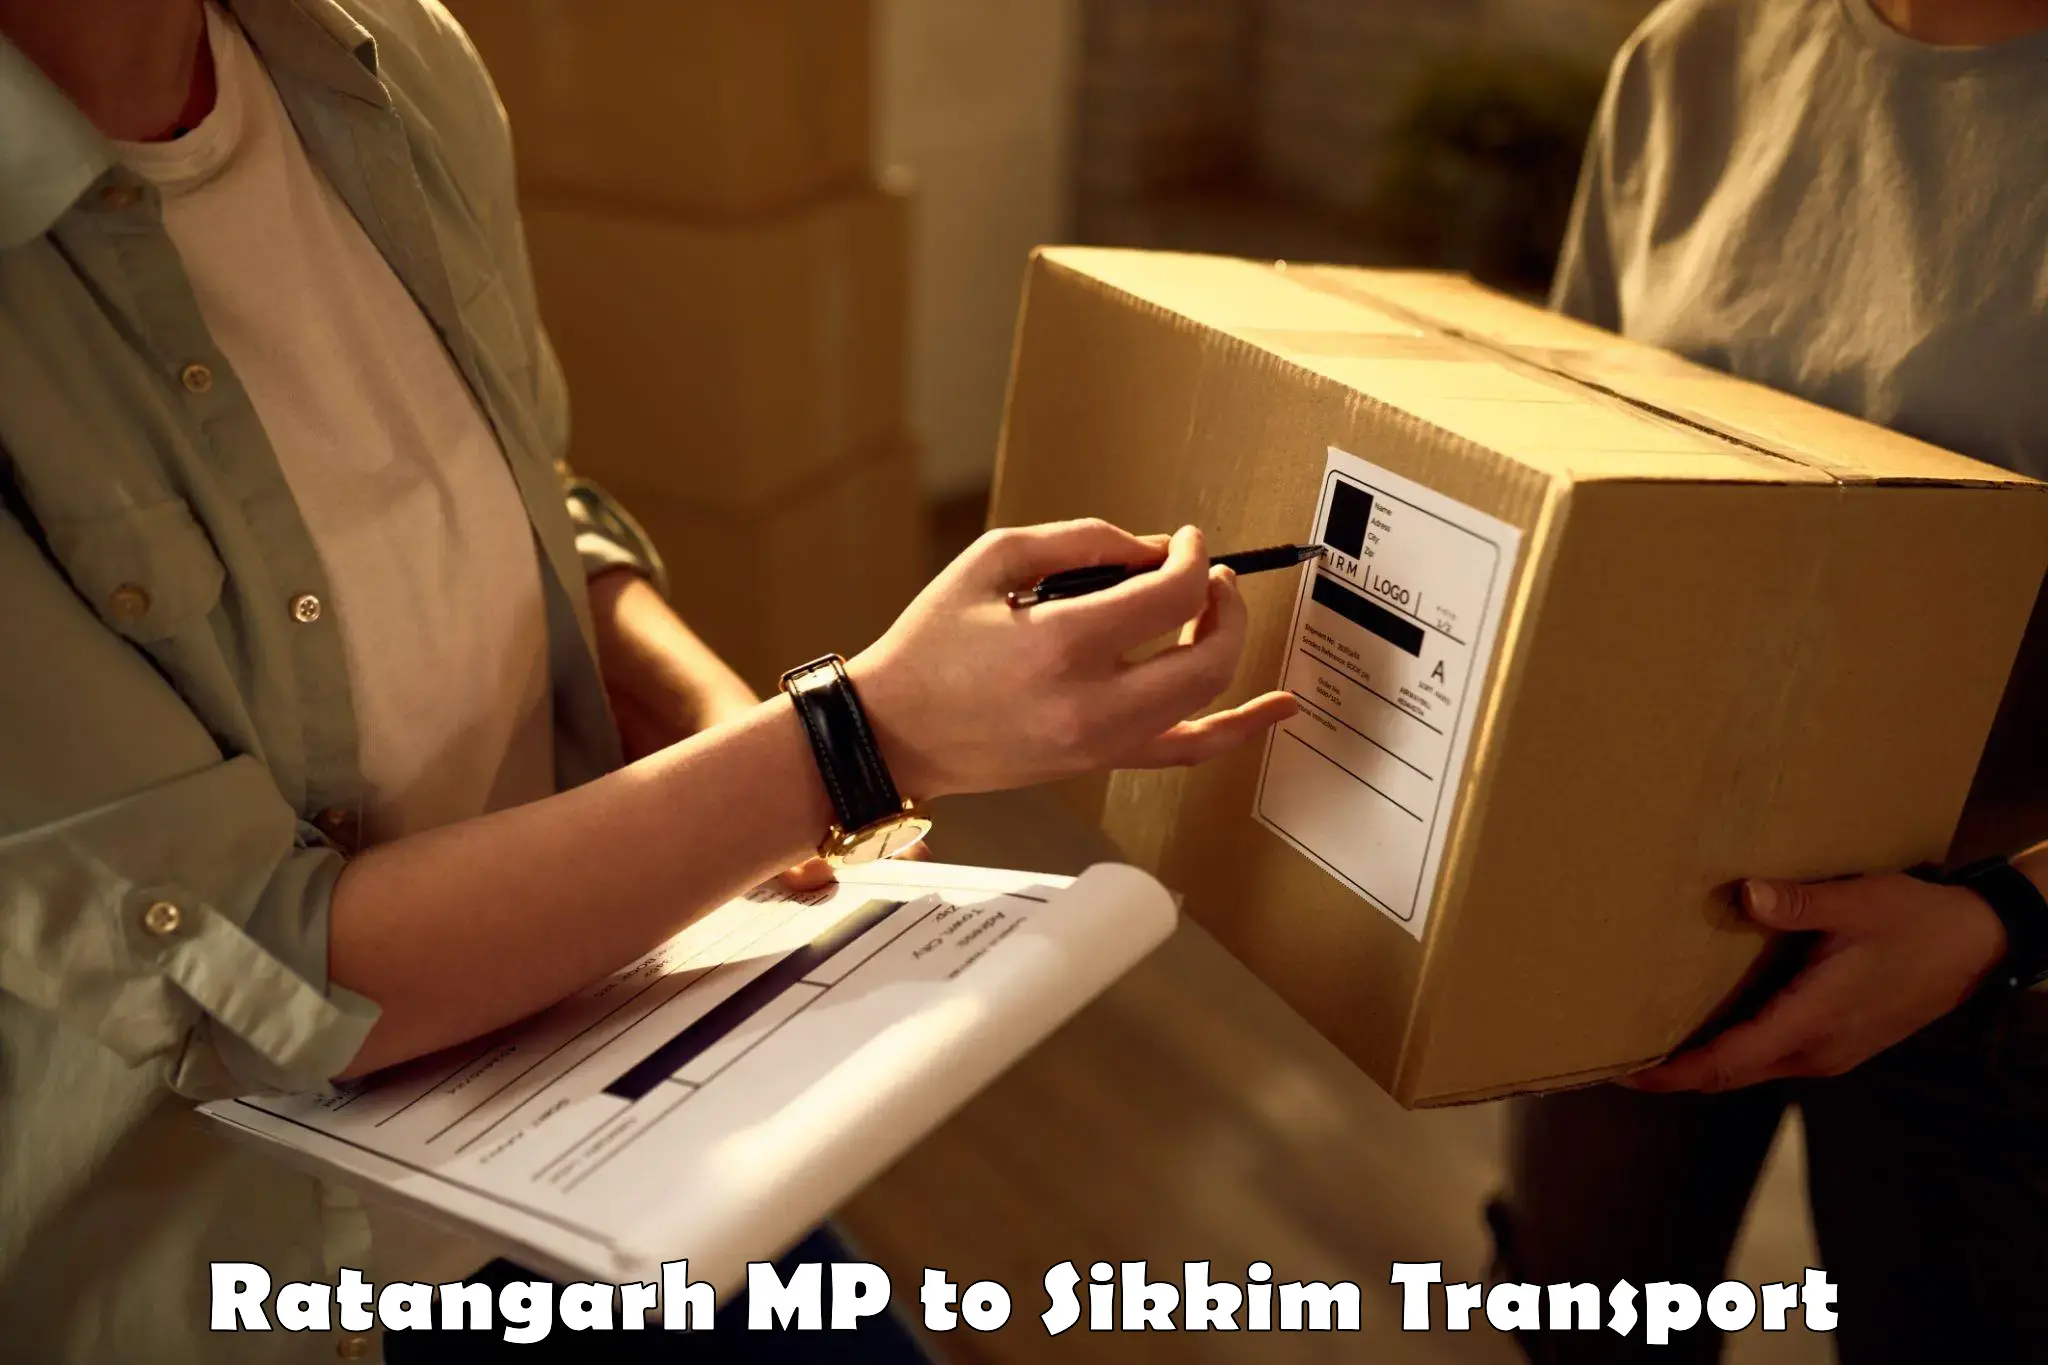 Pick up transport service Ratangarh MP to Rangpo